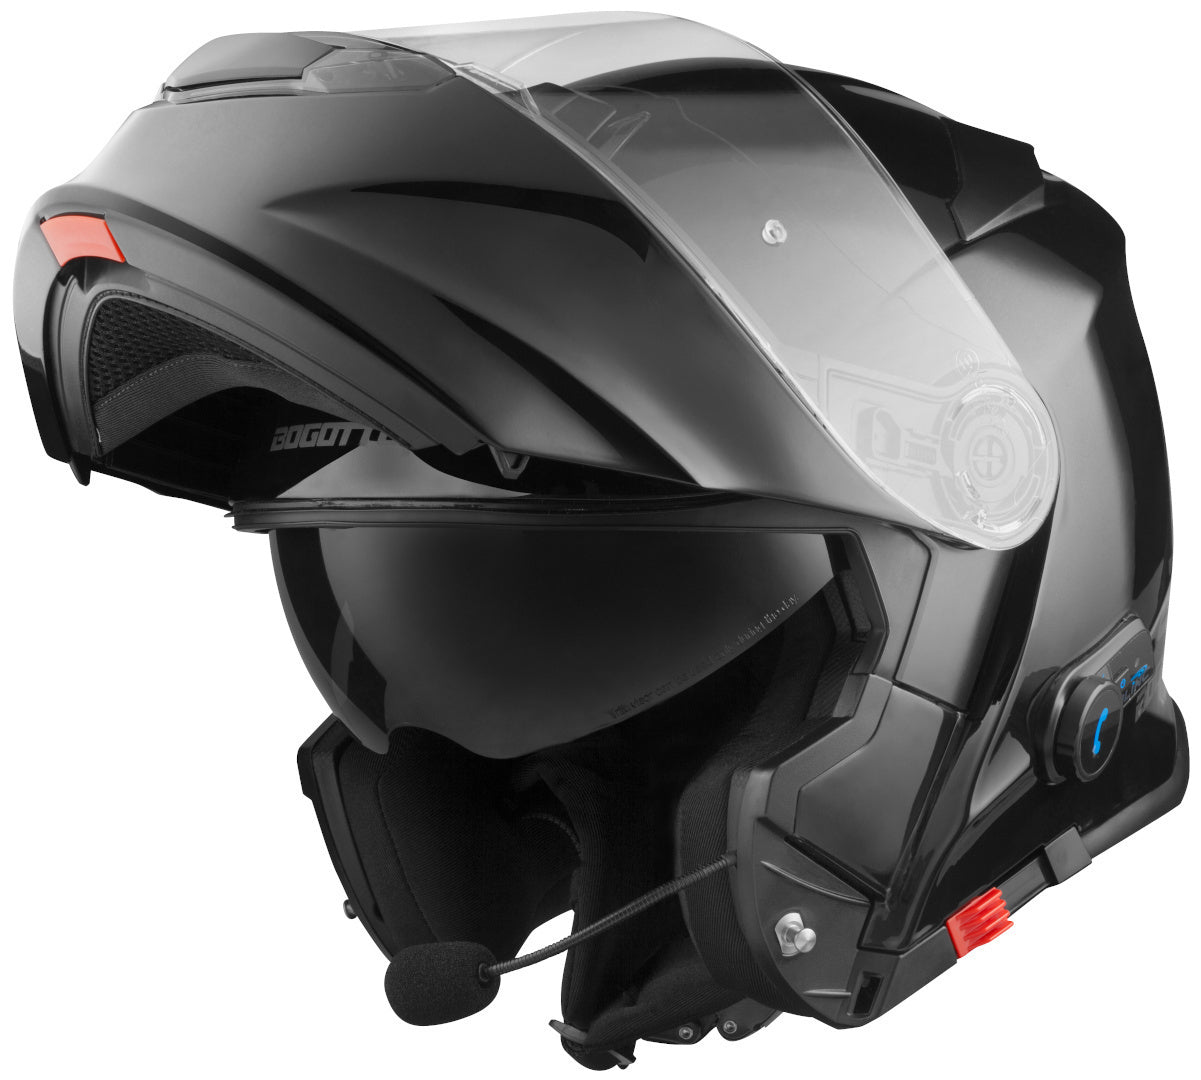 Bogotto V271 BT Bluetooth Helmet#color_black